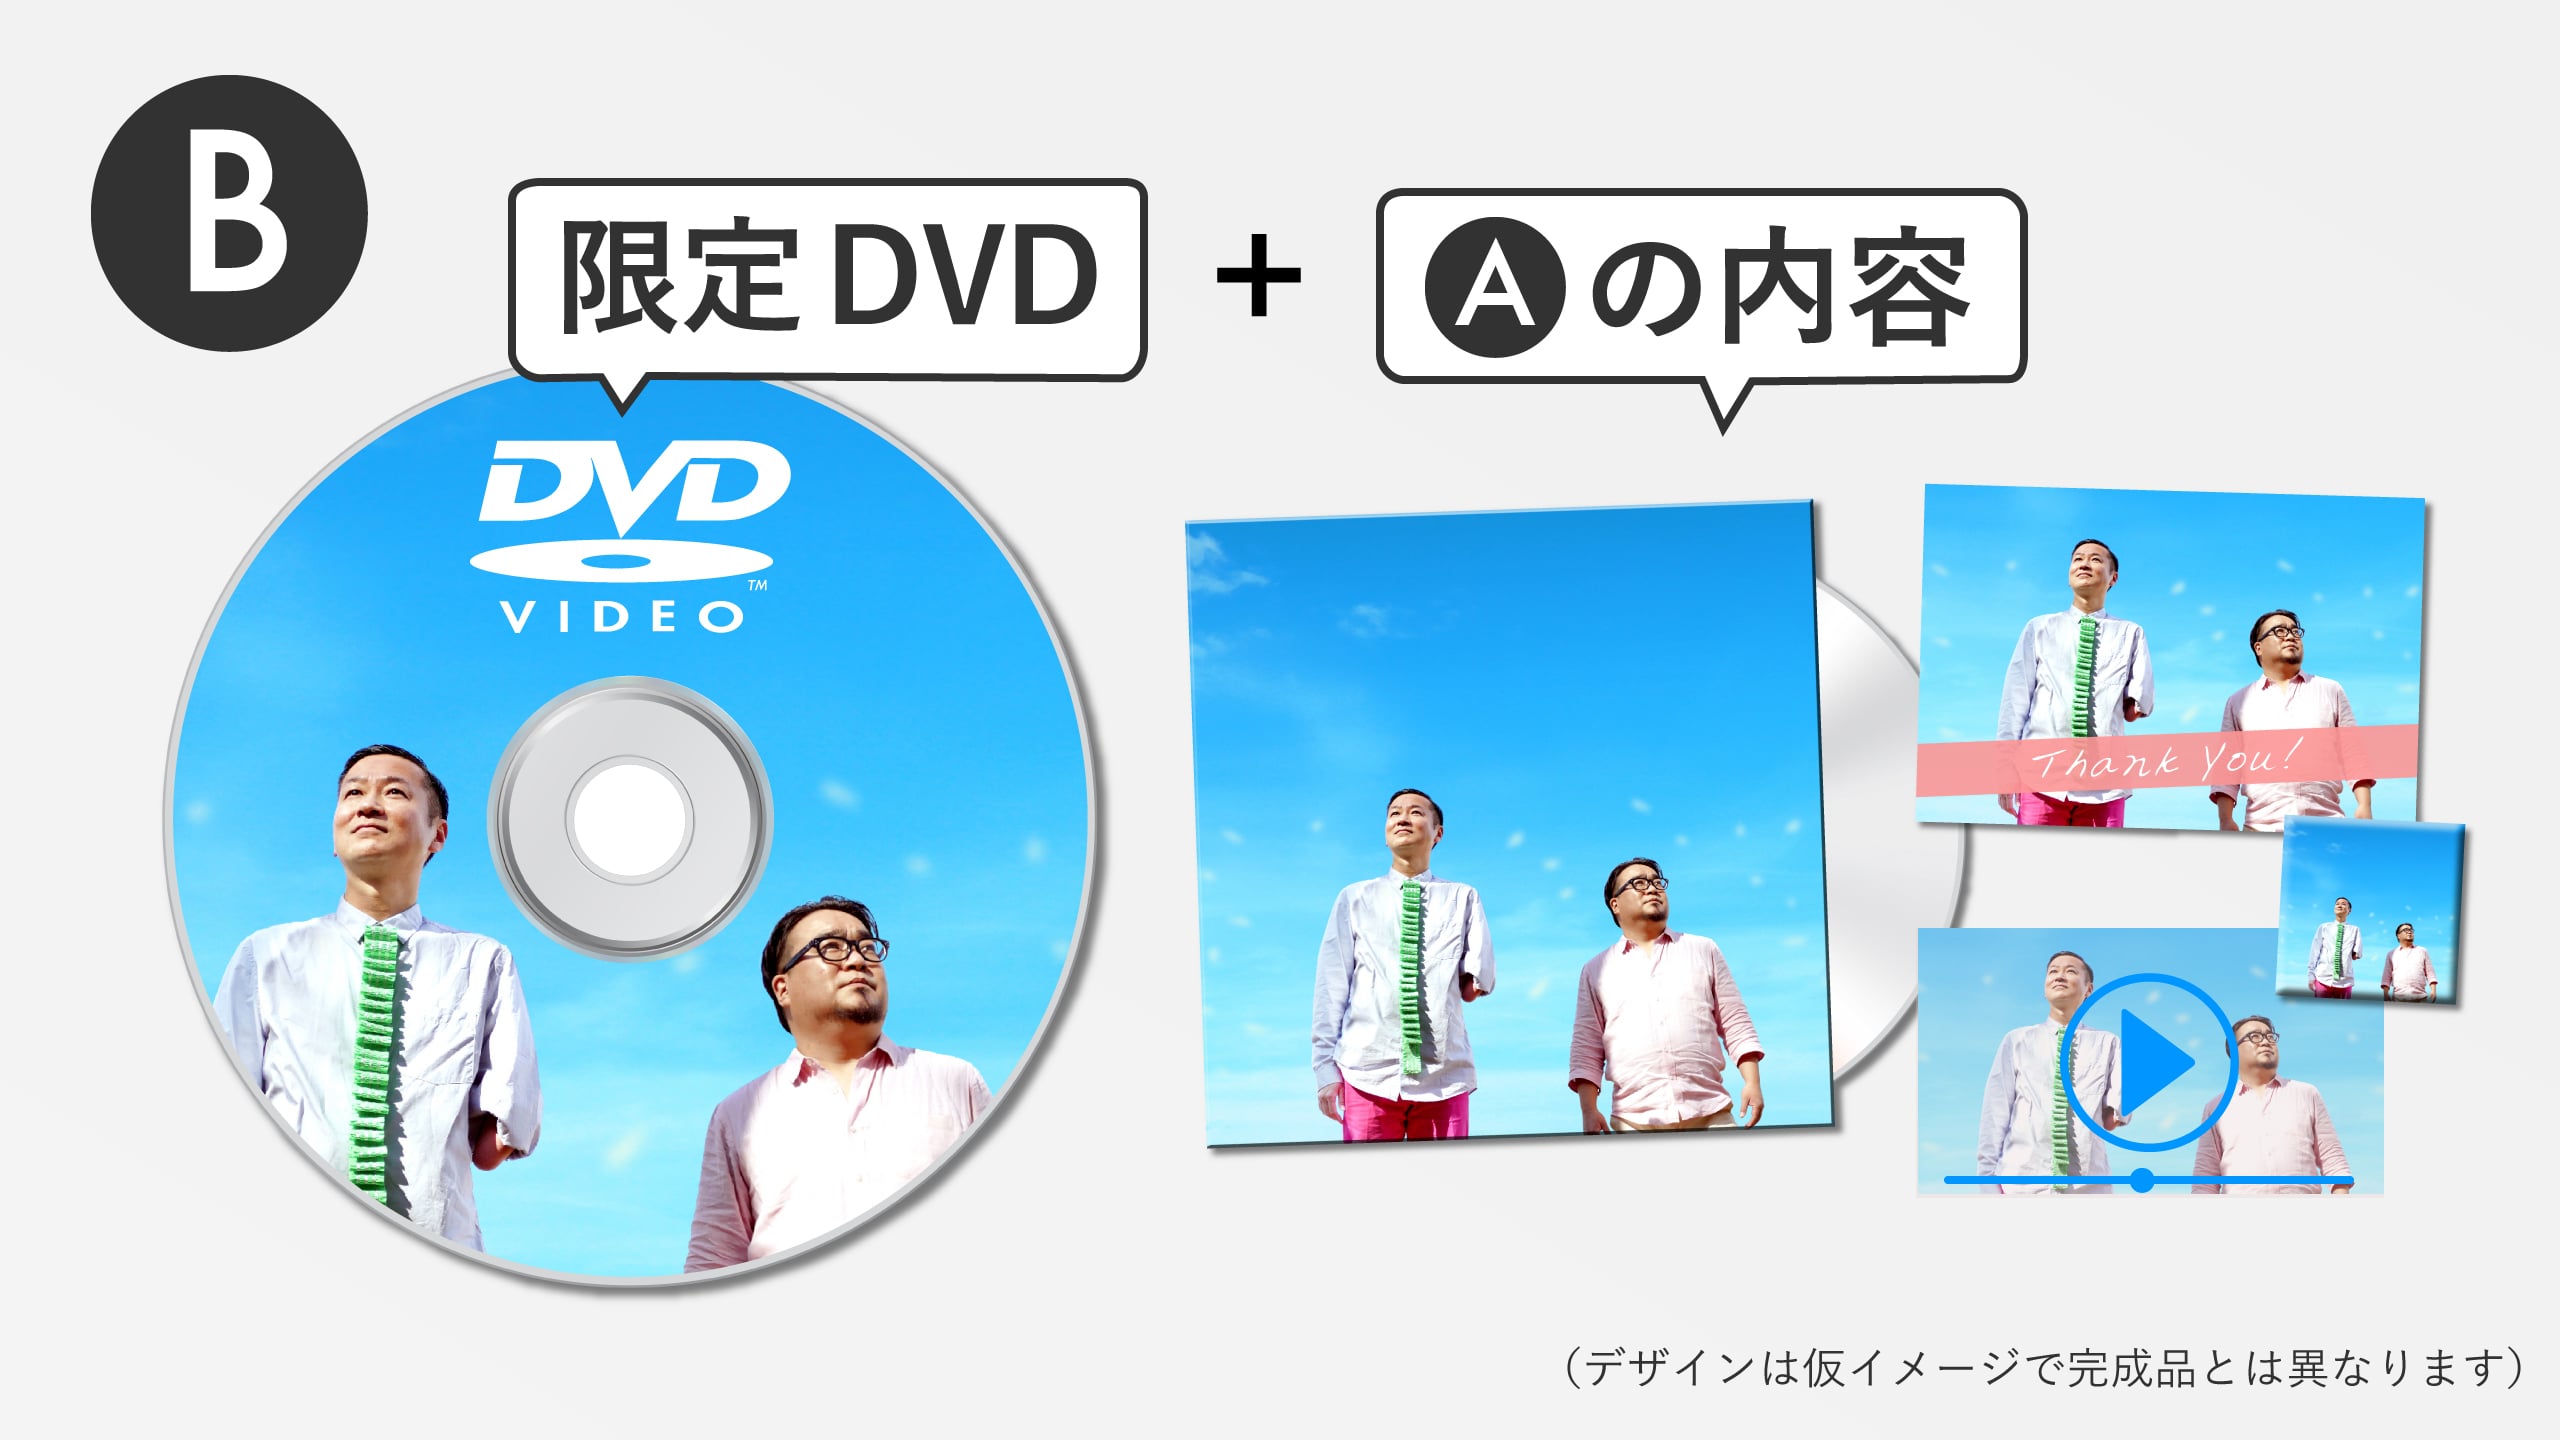 B 限定DVDプラン